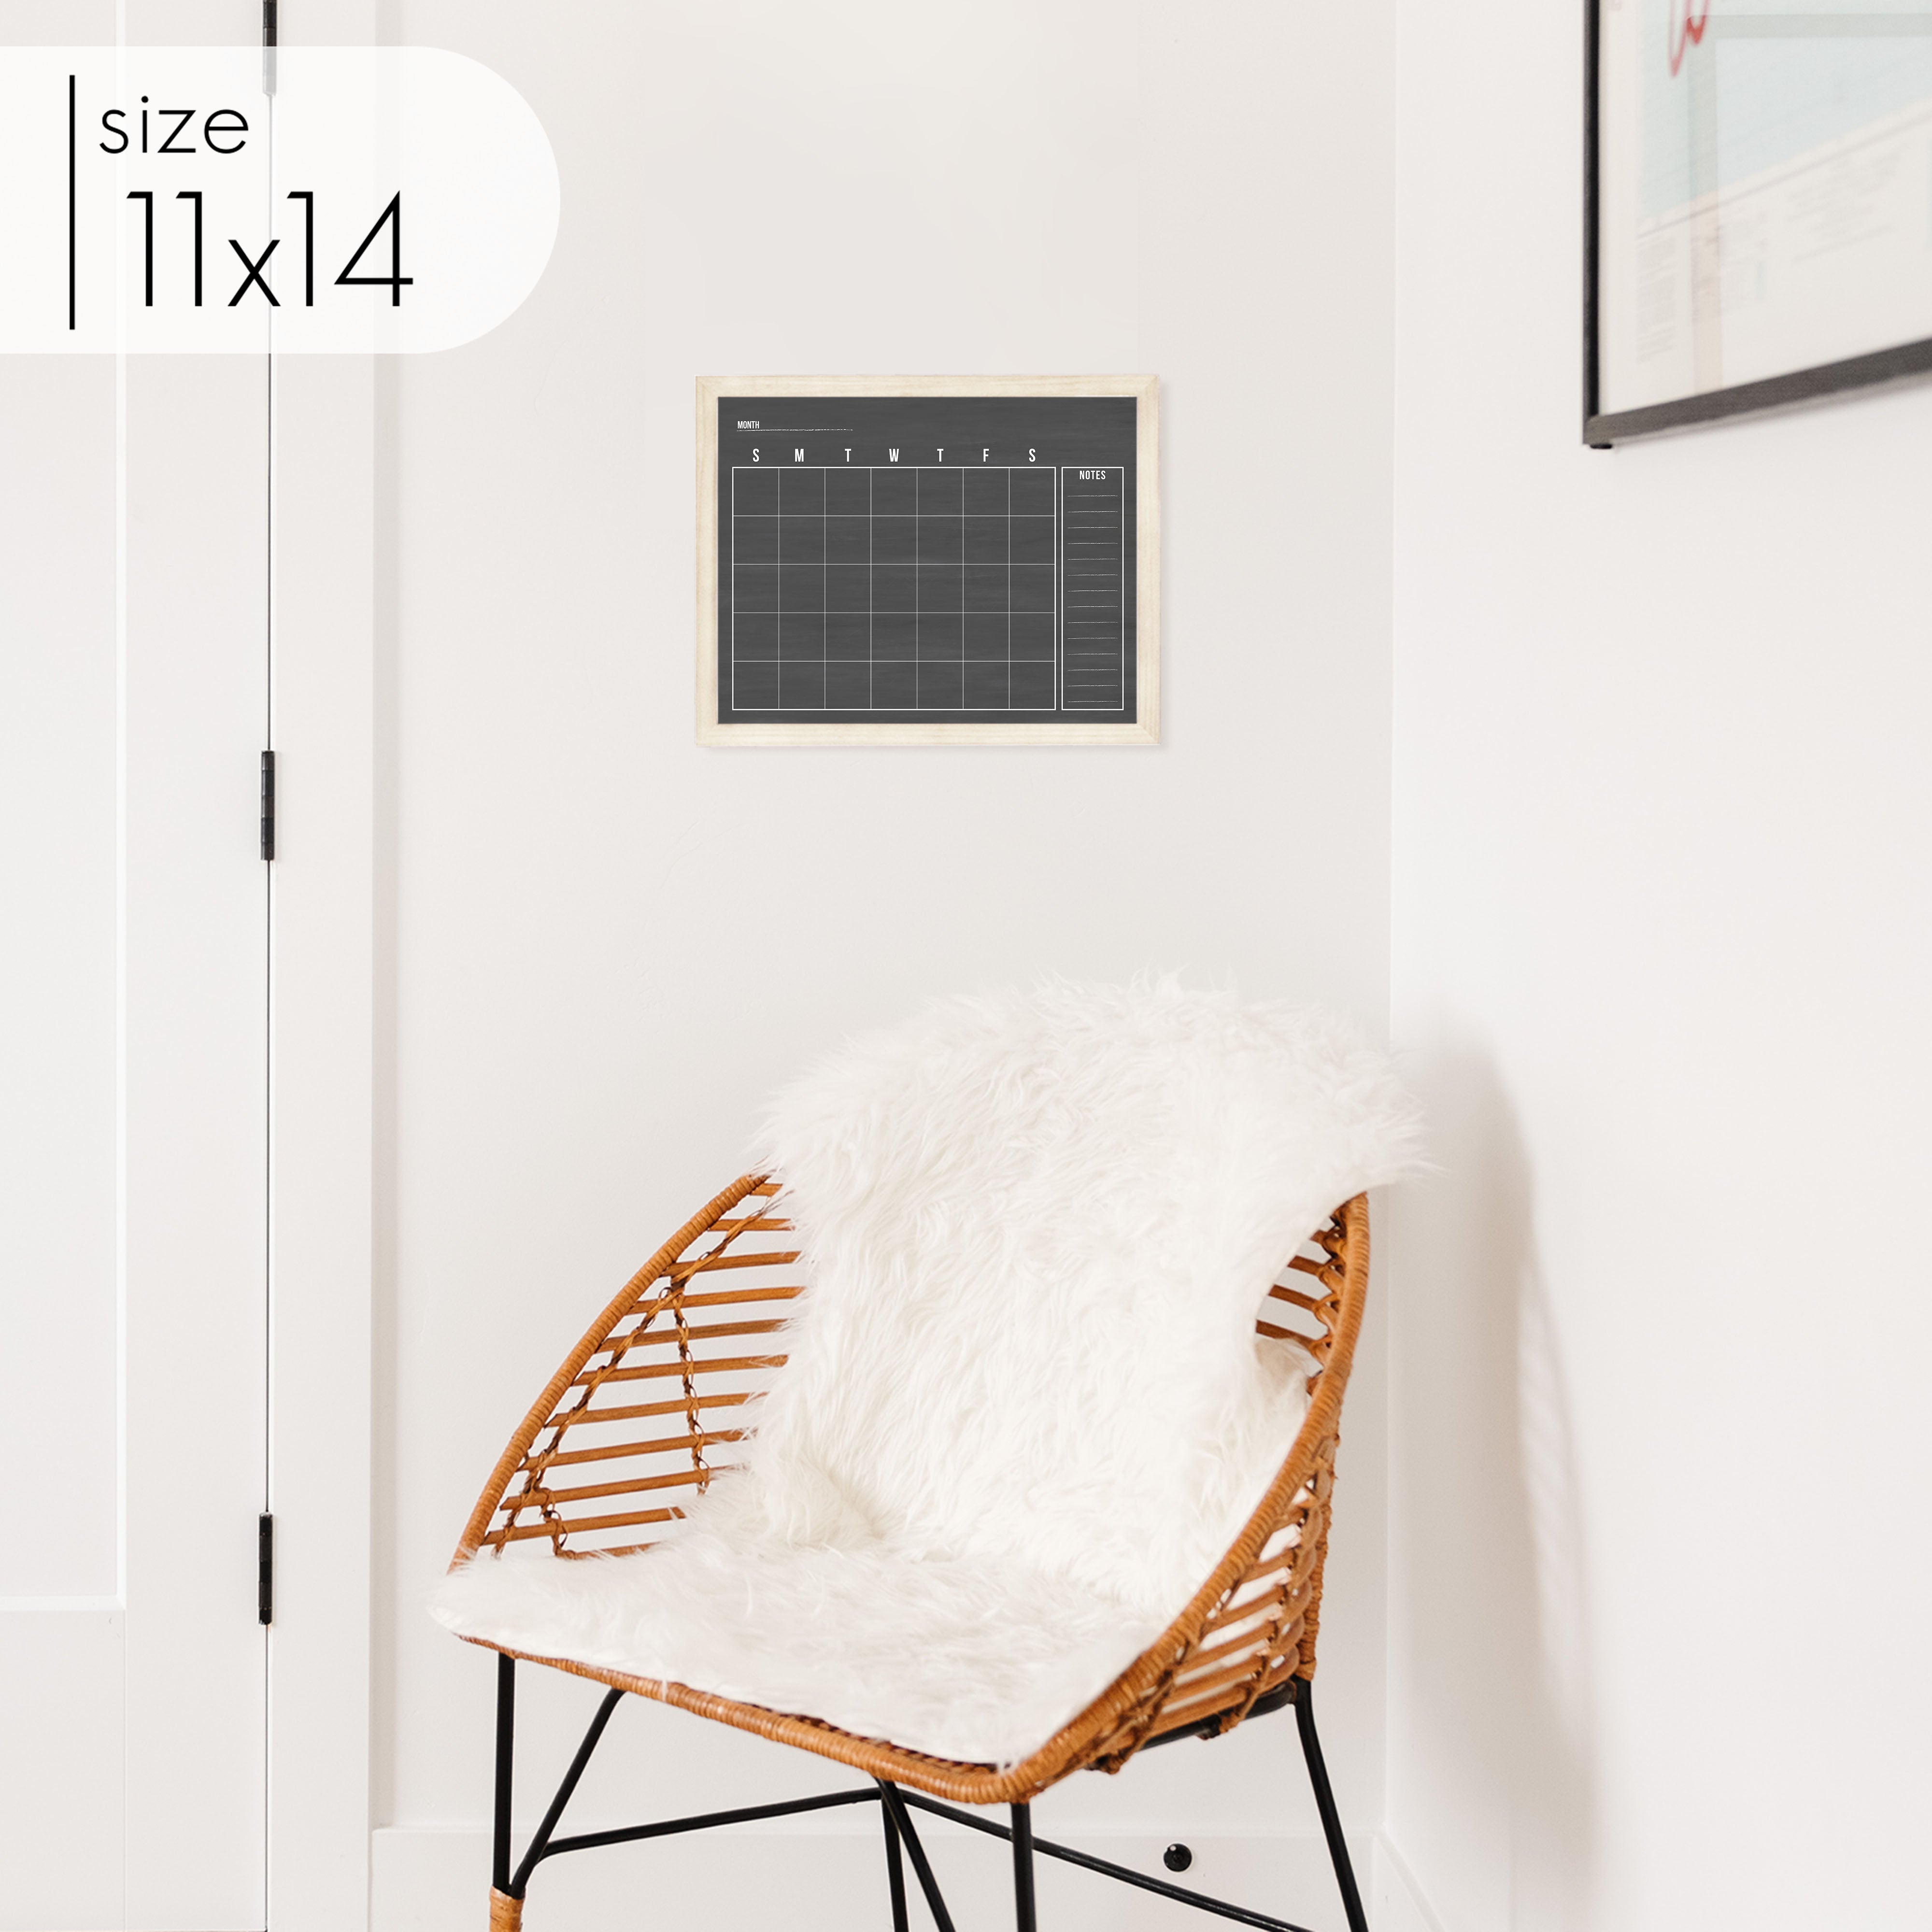 Monthly Framed Chalkboard Calendar + 1 section | Horizontal Dwyer